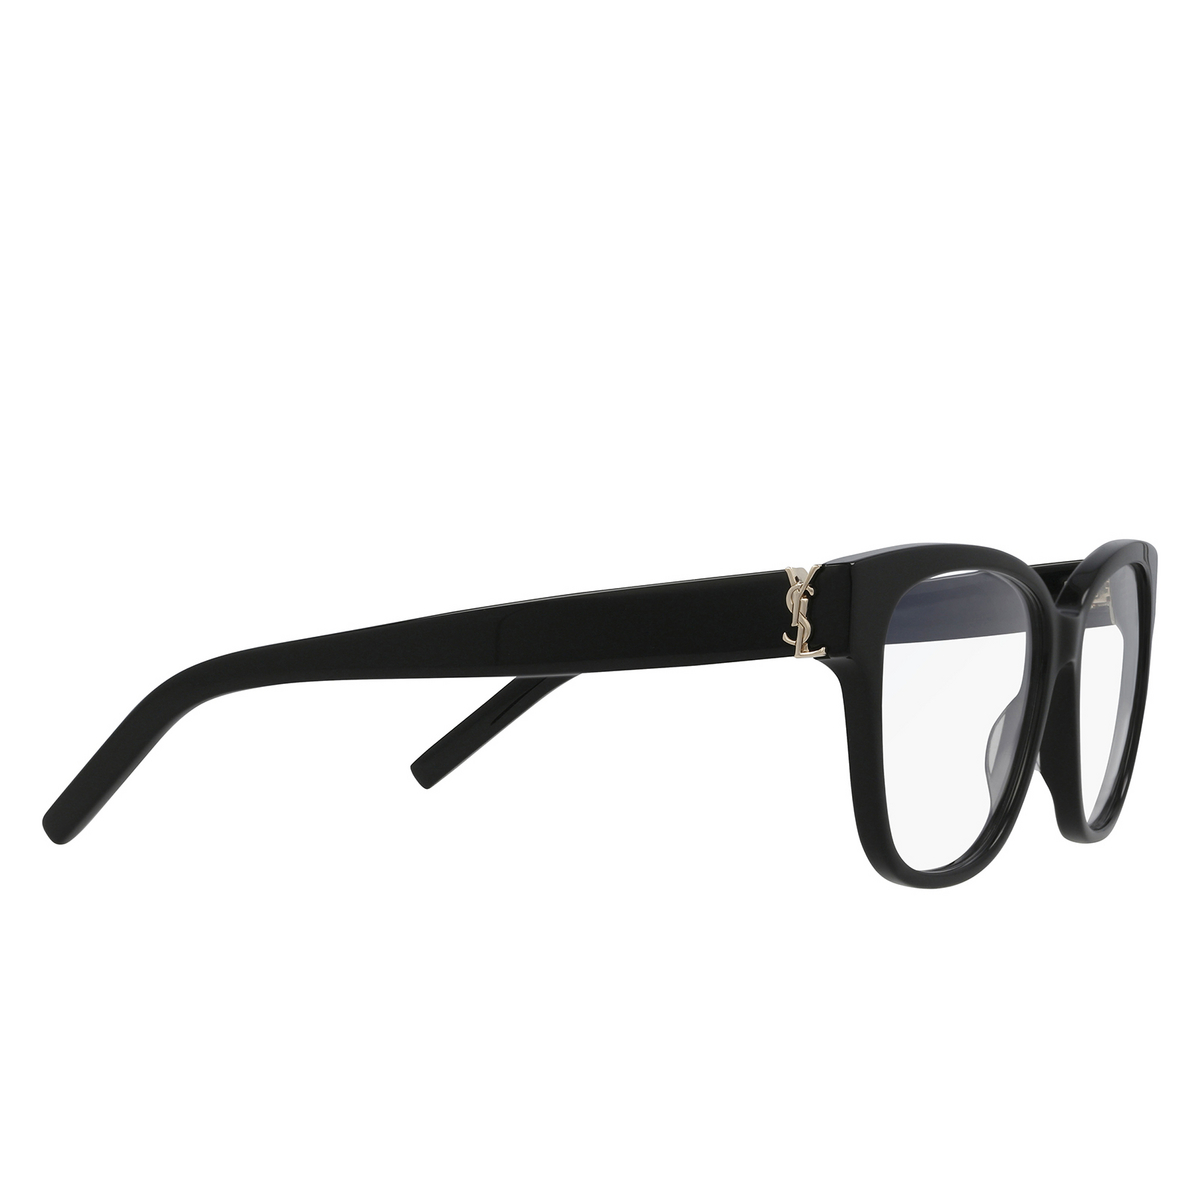 Saint Laurent® Square Eyeglasses: SL M33 color Black 003 - three-quarters view.